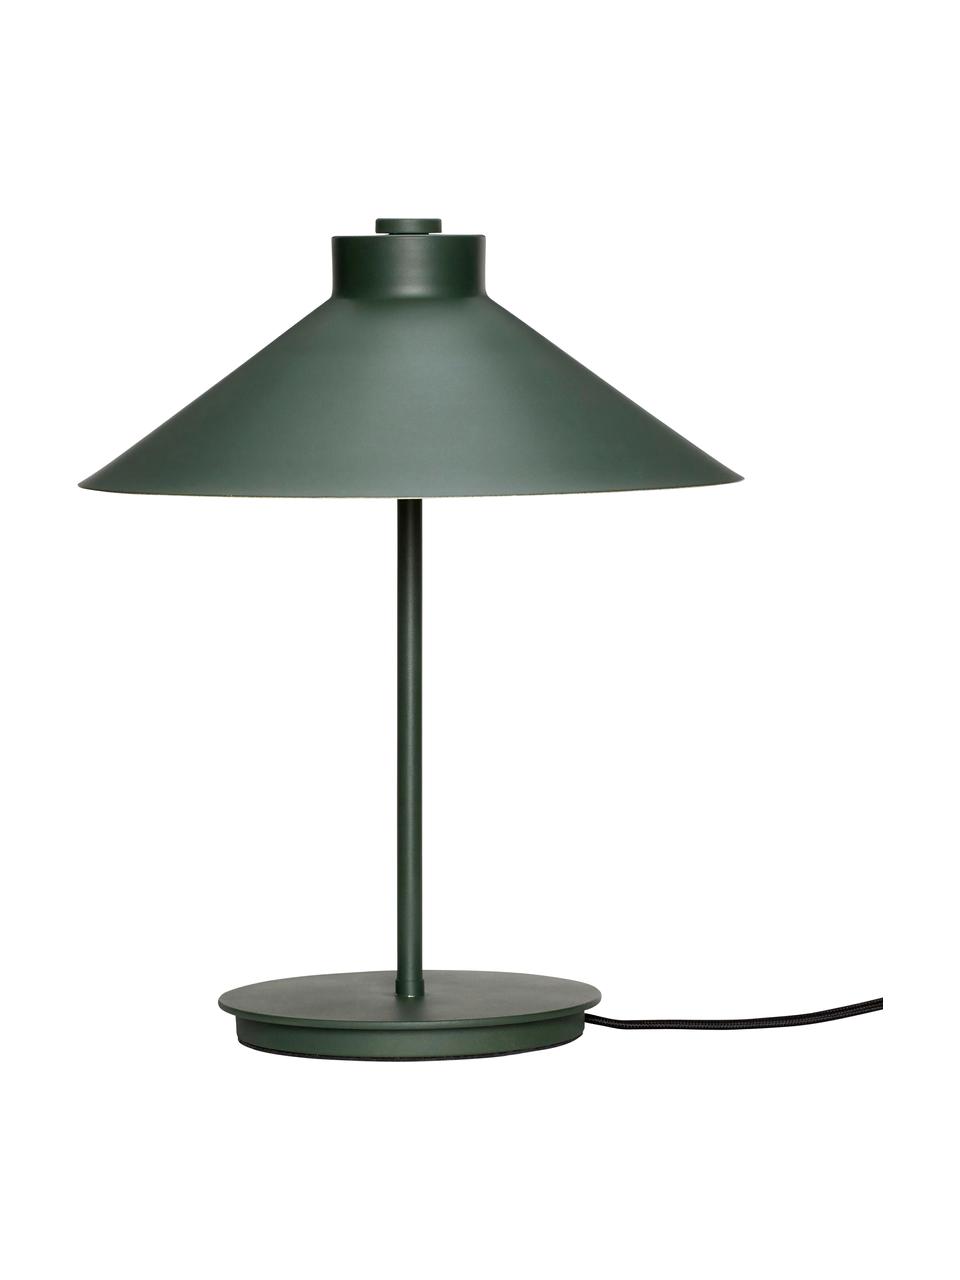 Lampe à poser design en métal vert foncé Garniur, Vert foncé